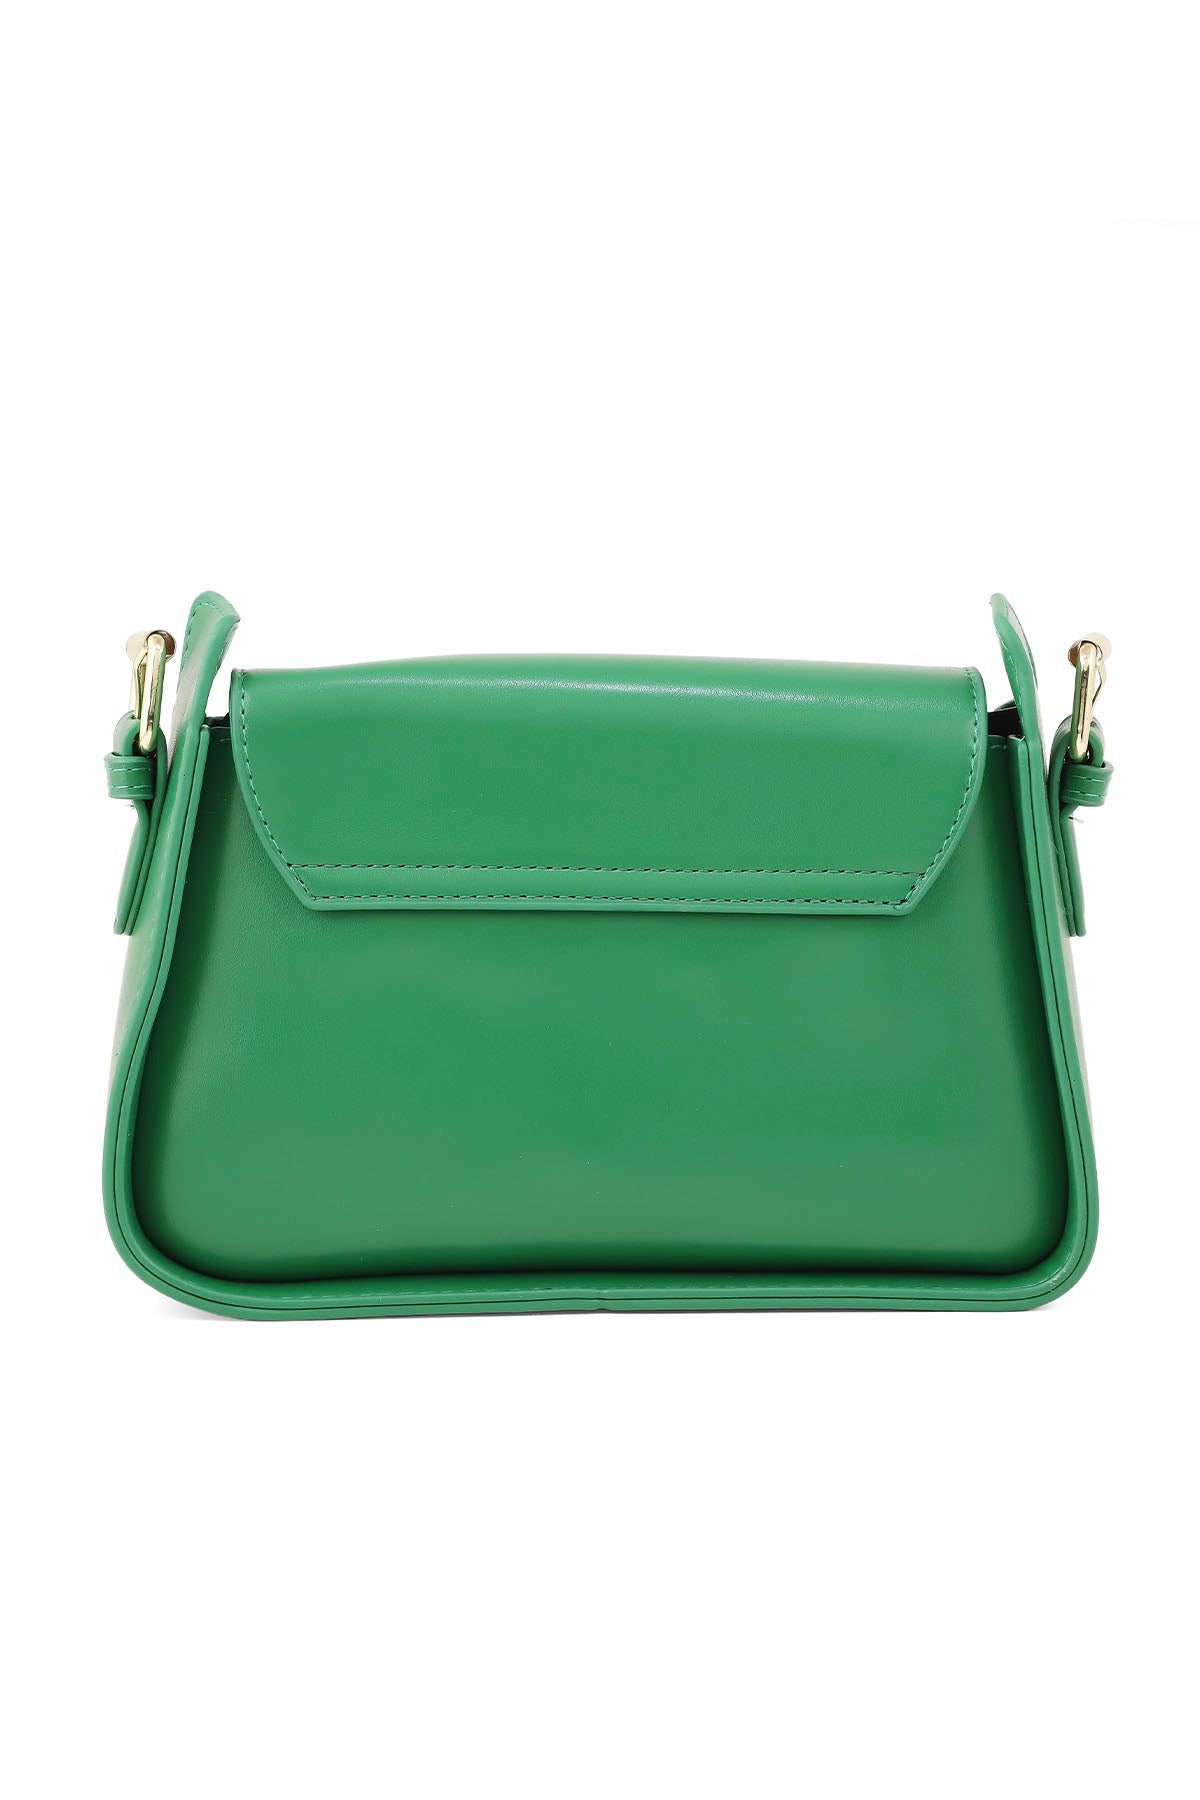 Cross Shoulder Bags B14954-Green